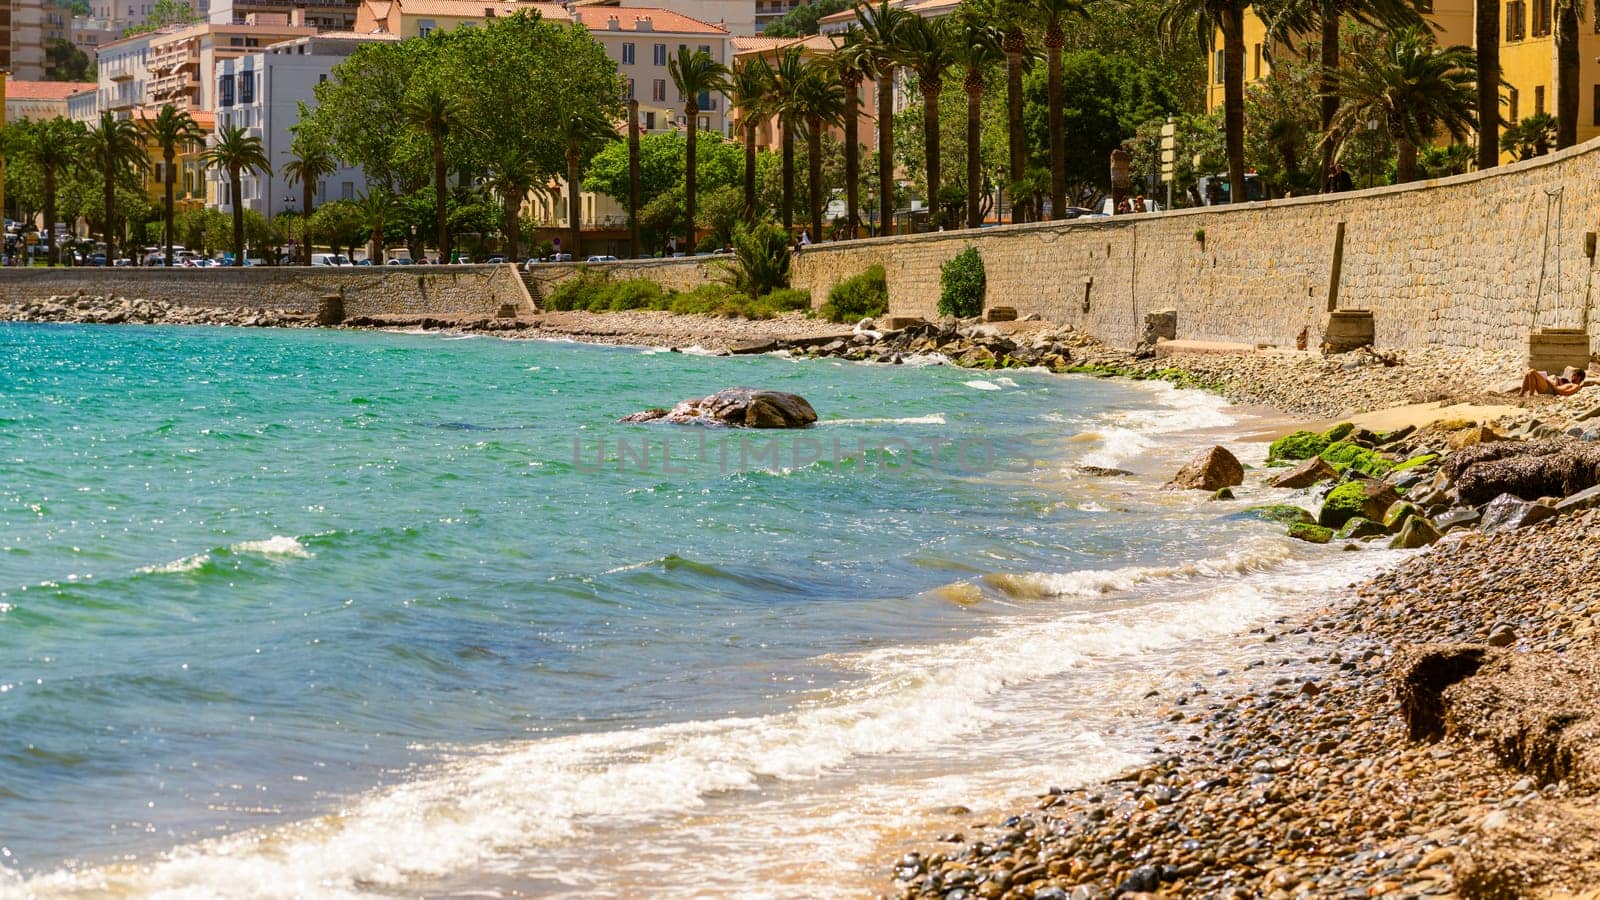 Ajaccio public beach, summer landscape of Corsica by vladispas